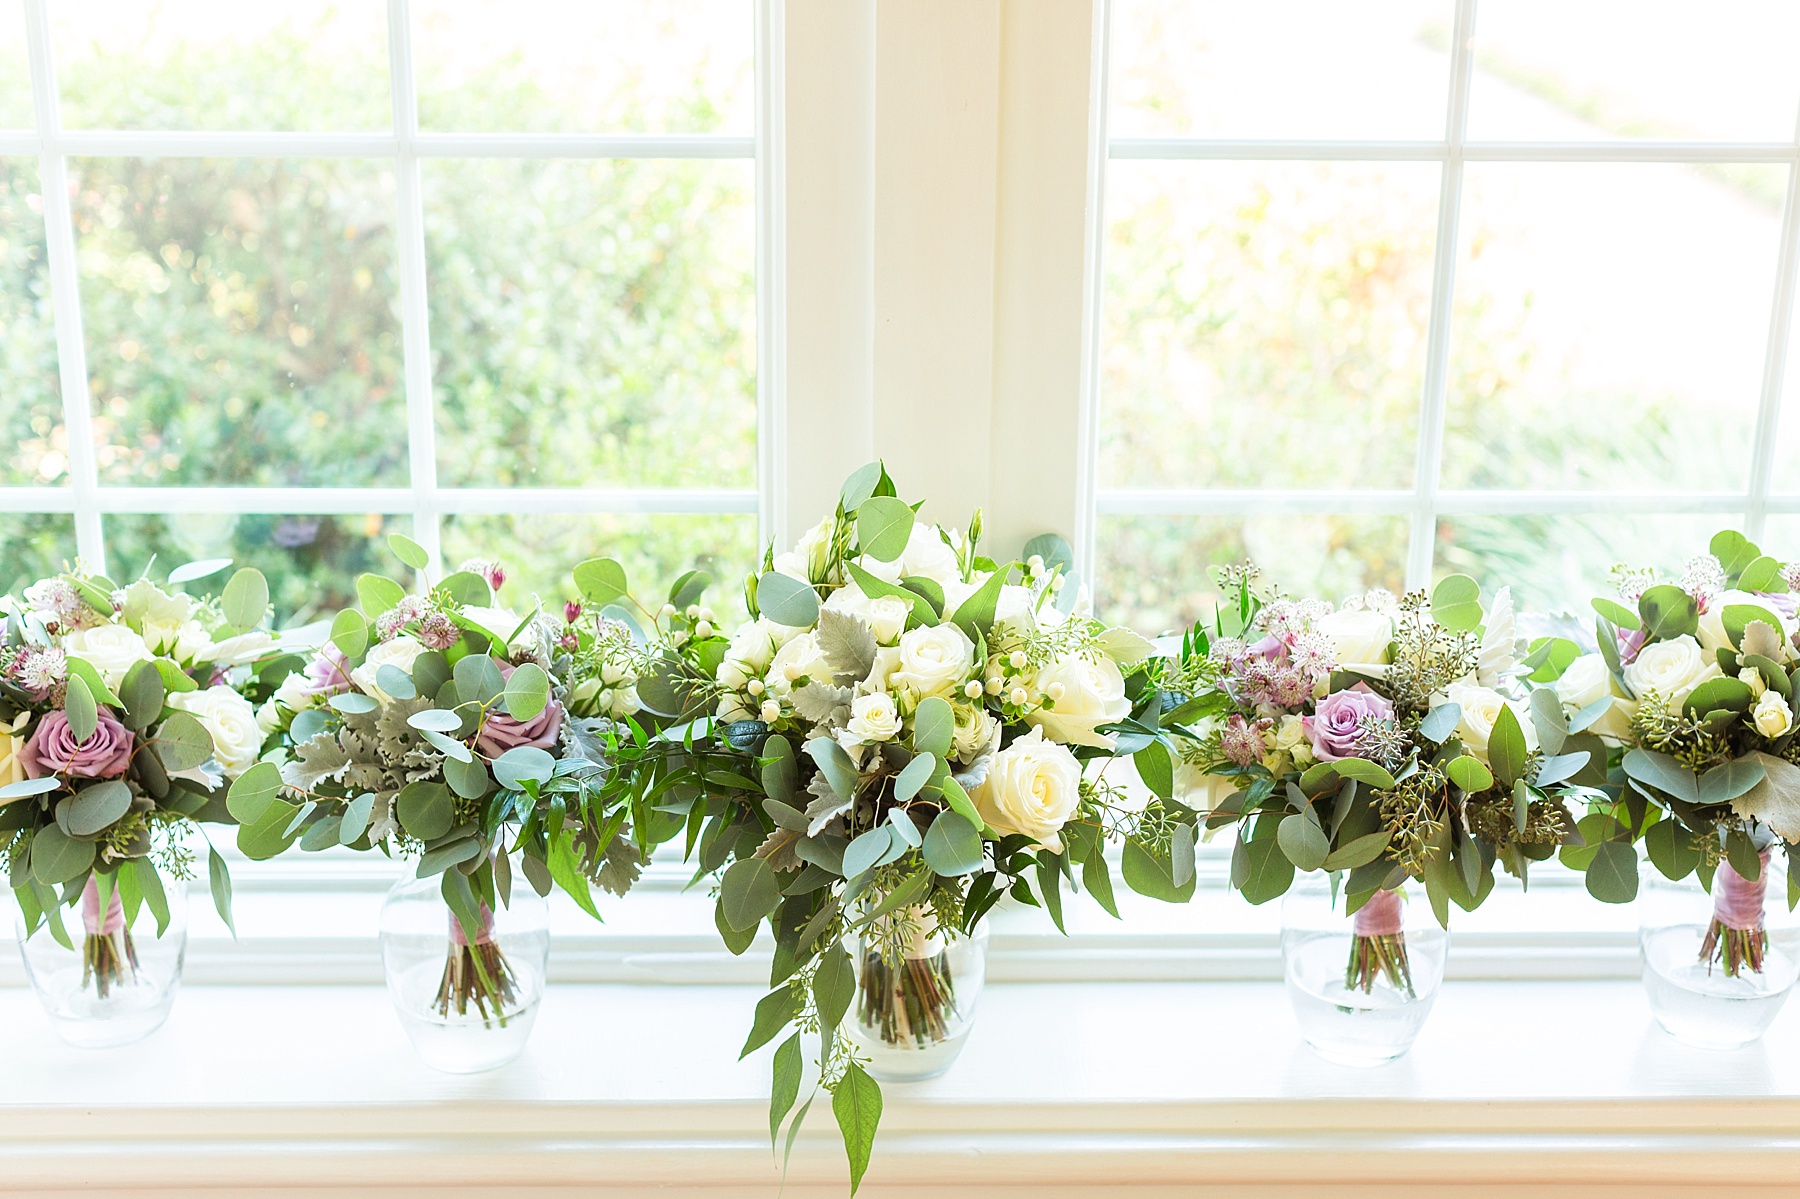 Amanda's Florist creates purple and ivory floral bouquets